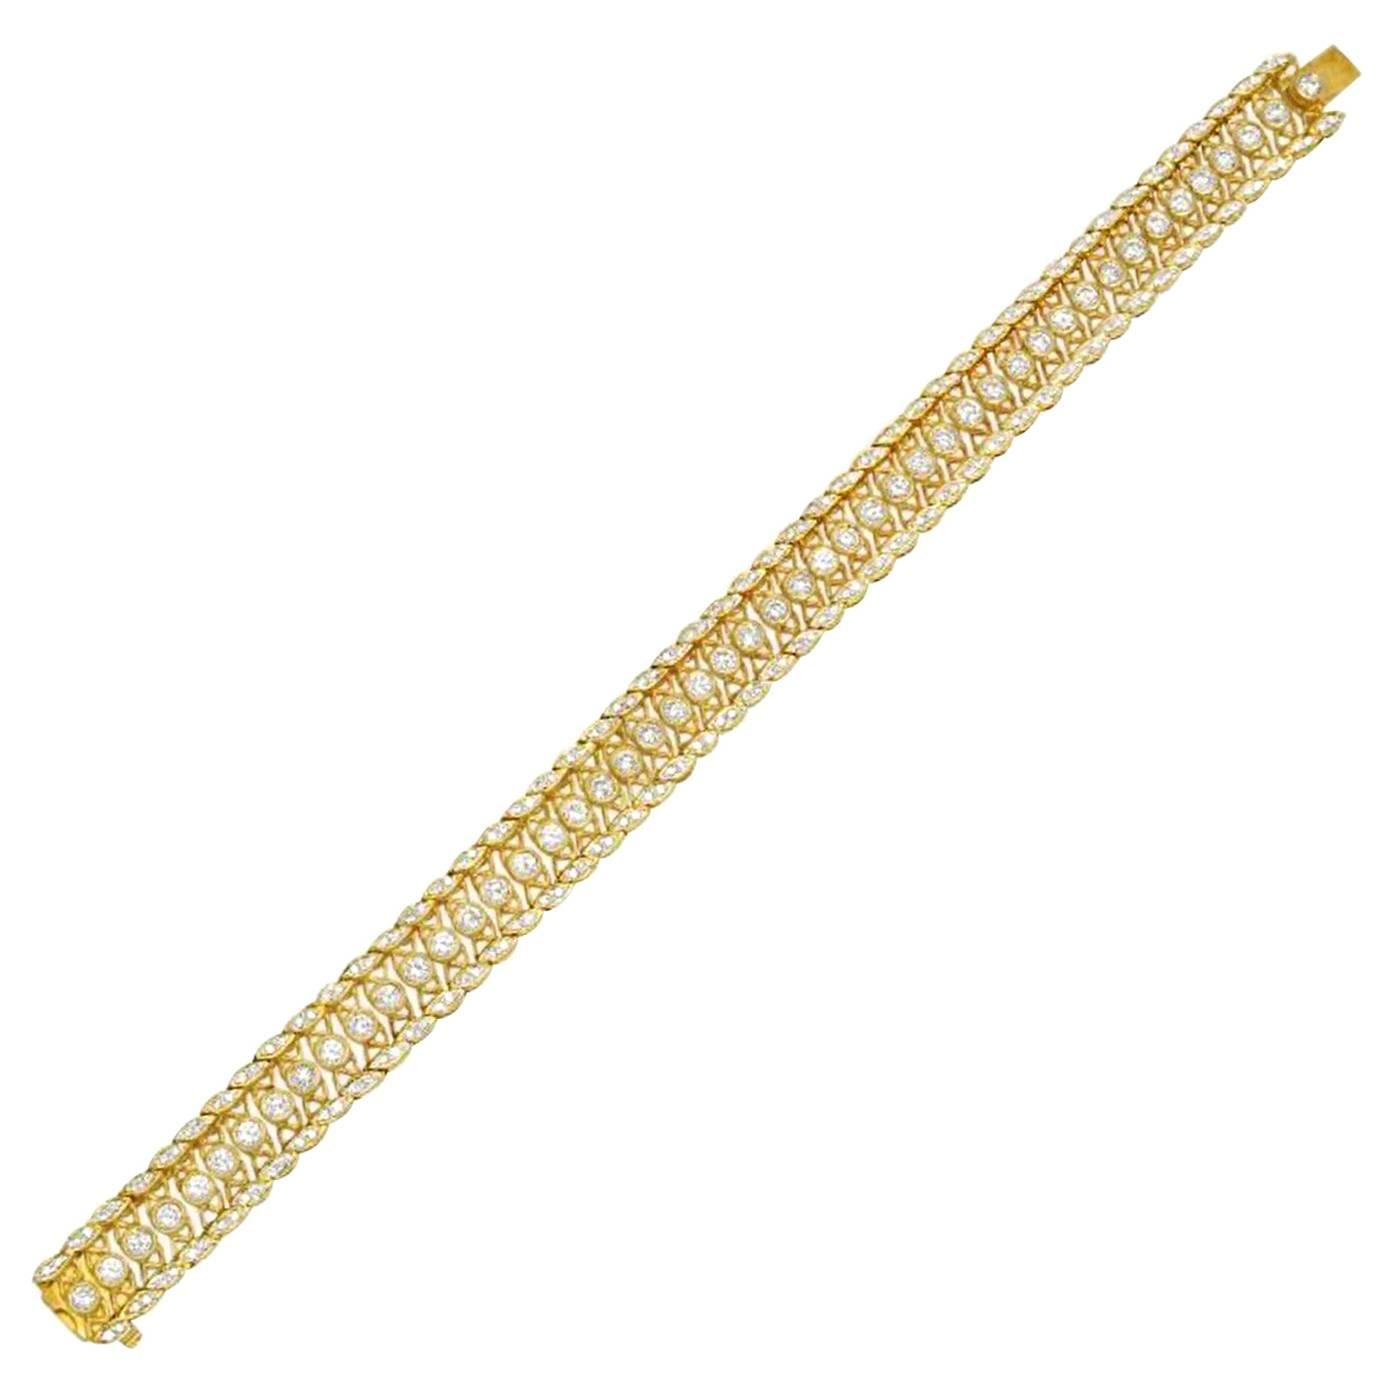 5 Carat Diamond and Gold Bracelet